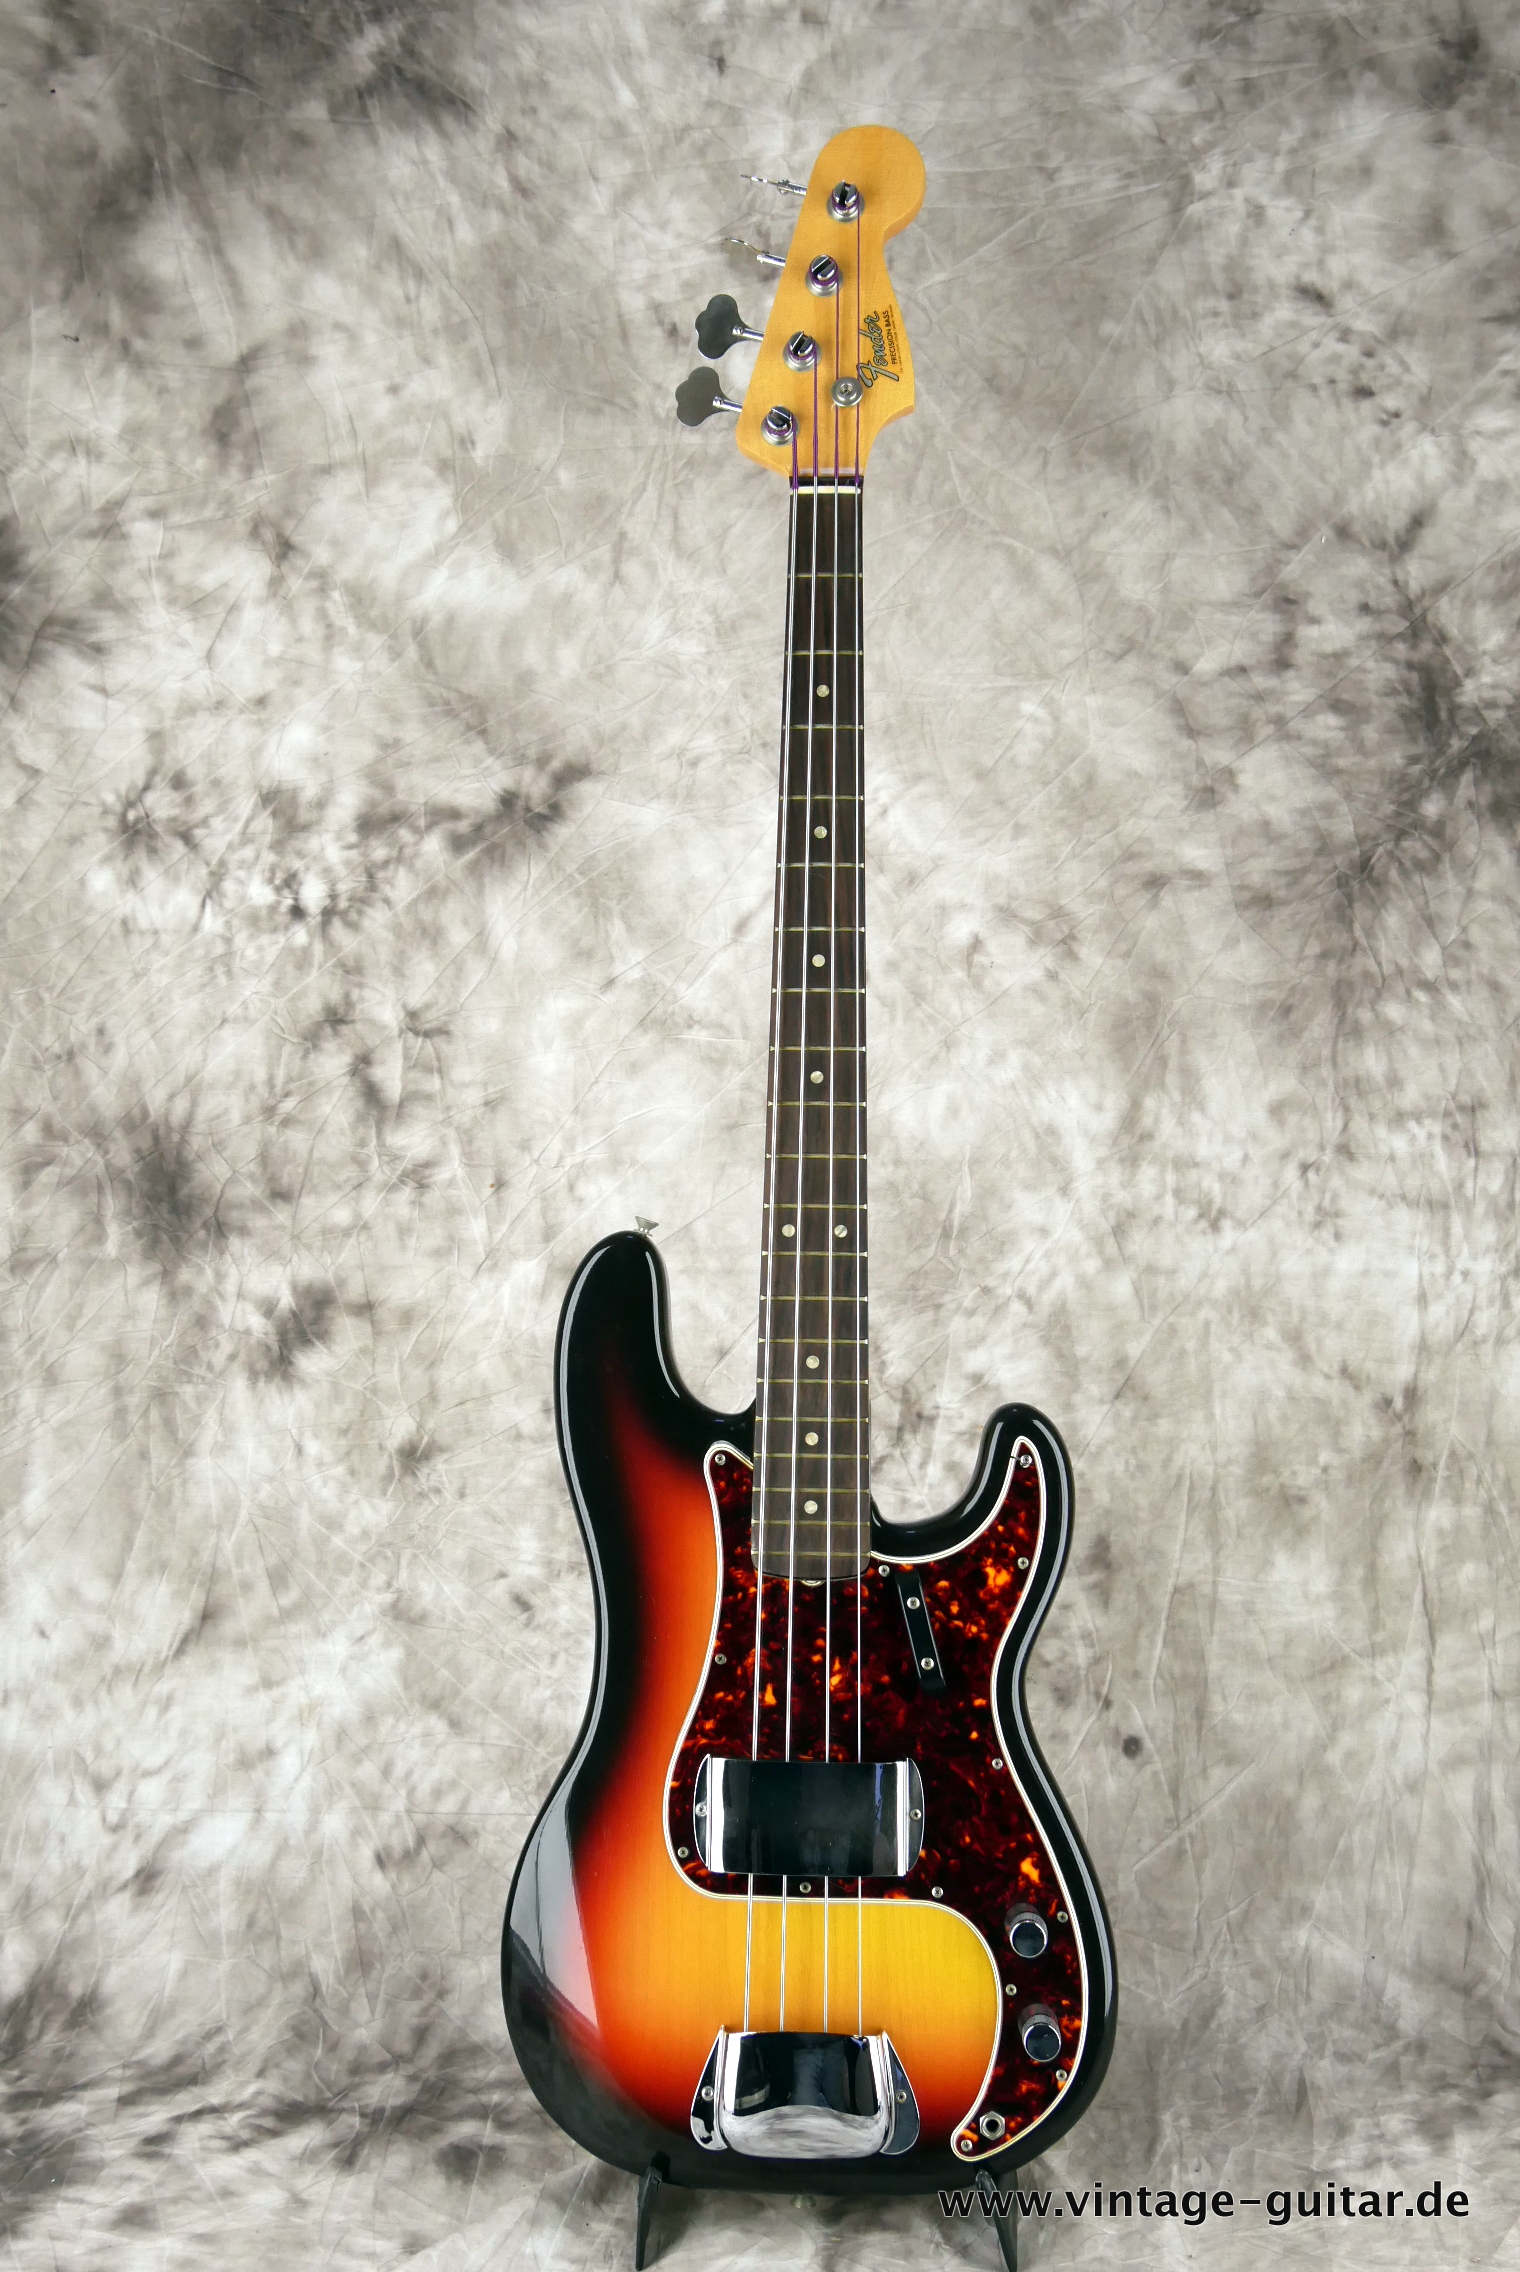 Fender-Precision-Bass-1965-sunburst-mint-condition-001.JPG